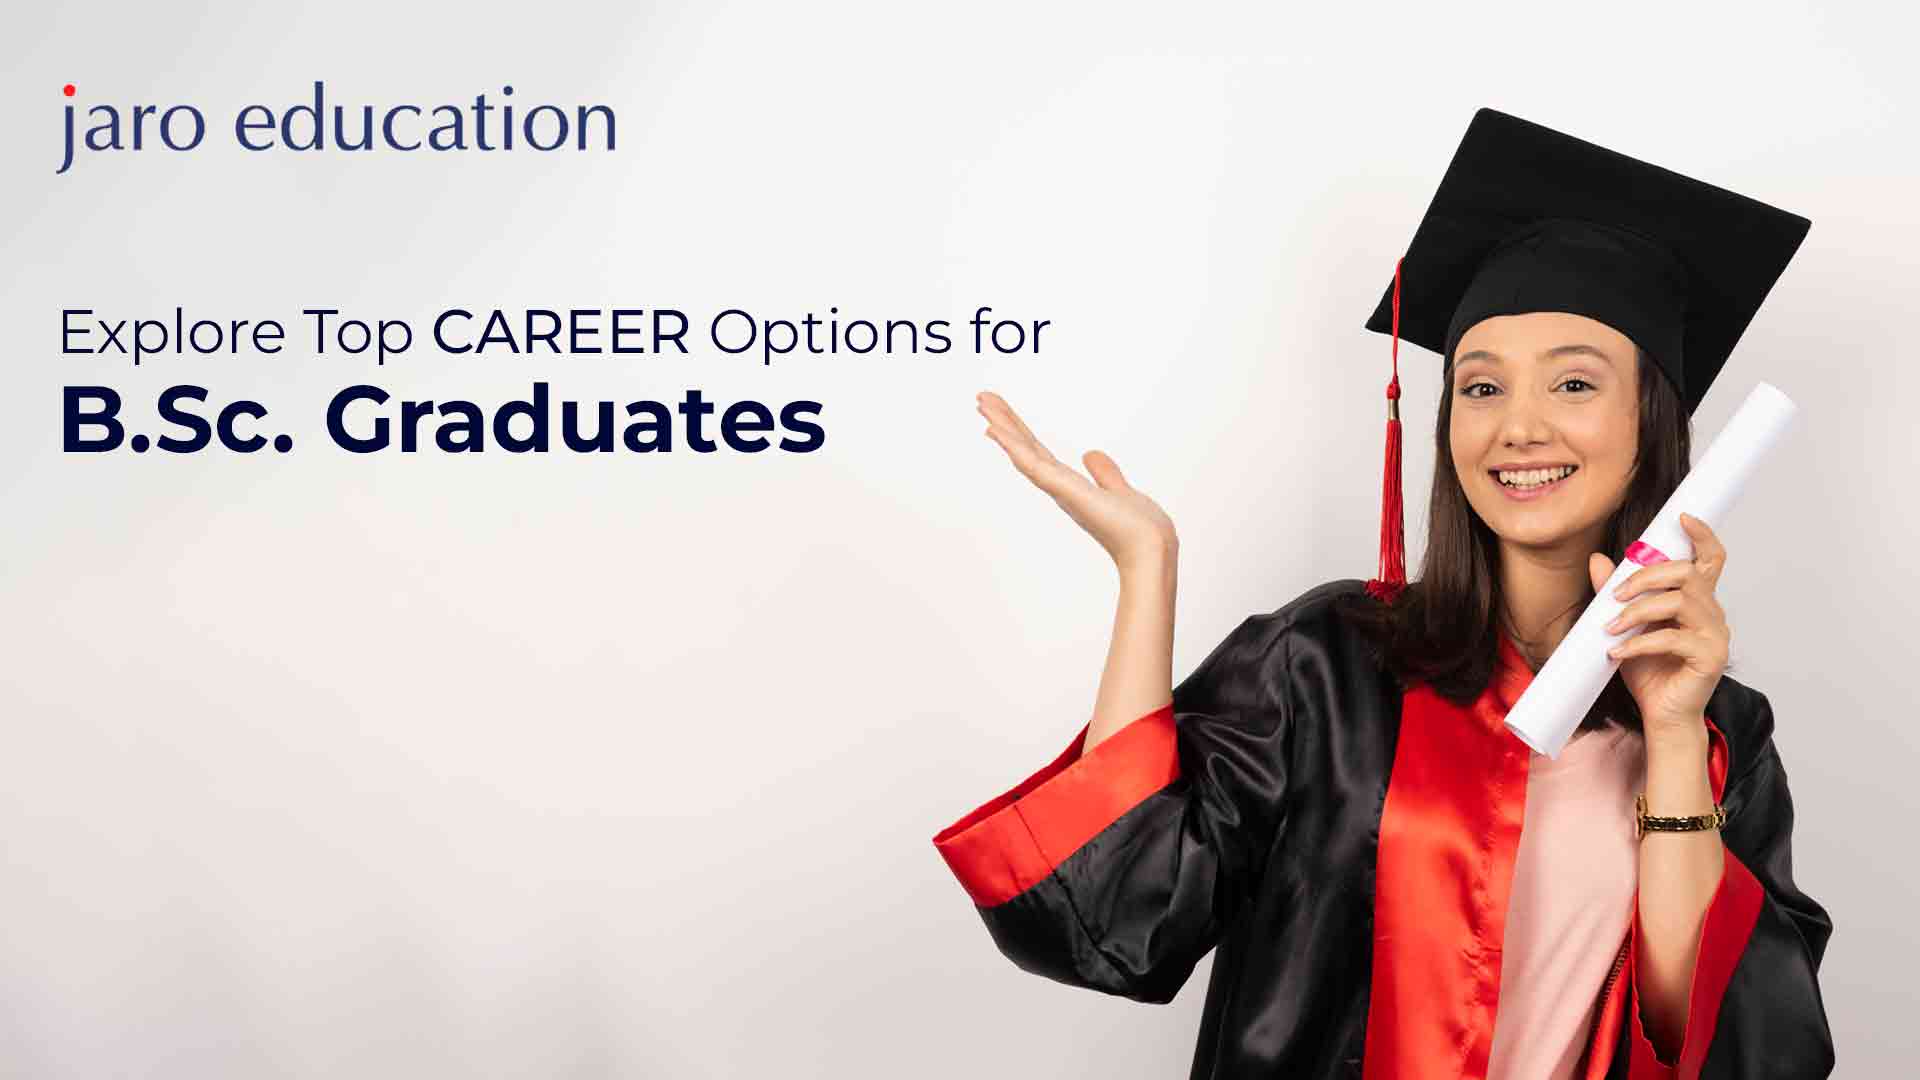 Explore Top Career Options for B.Sc. Graduates